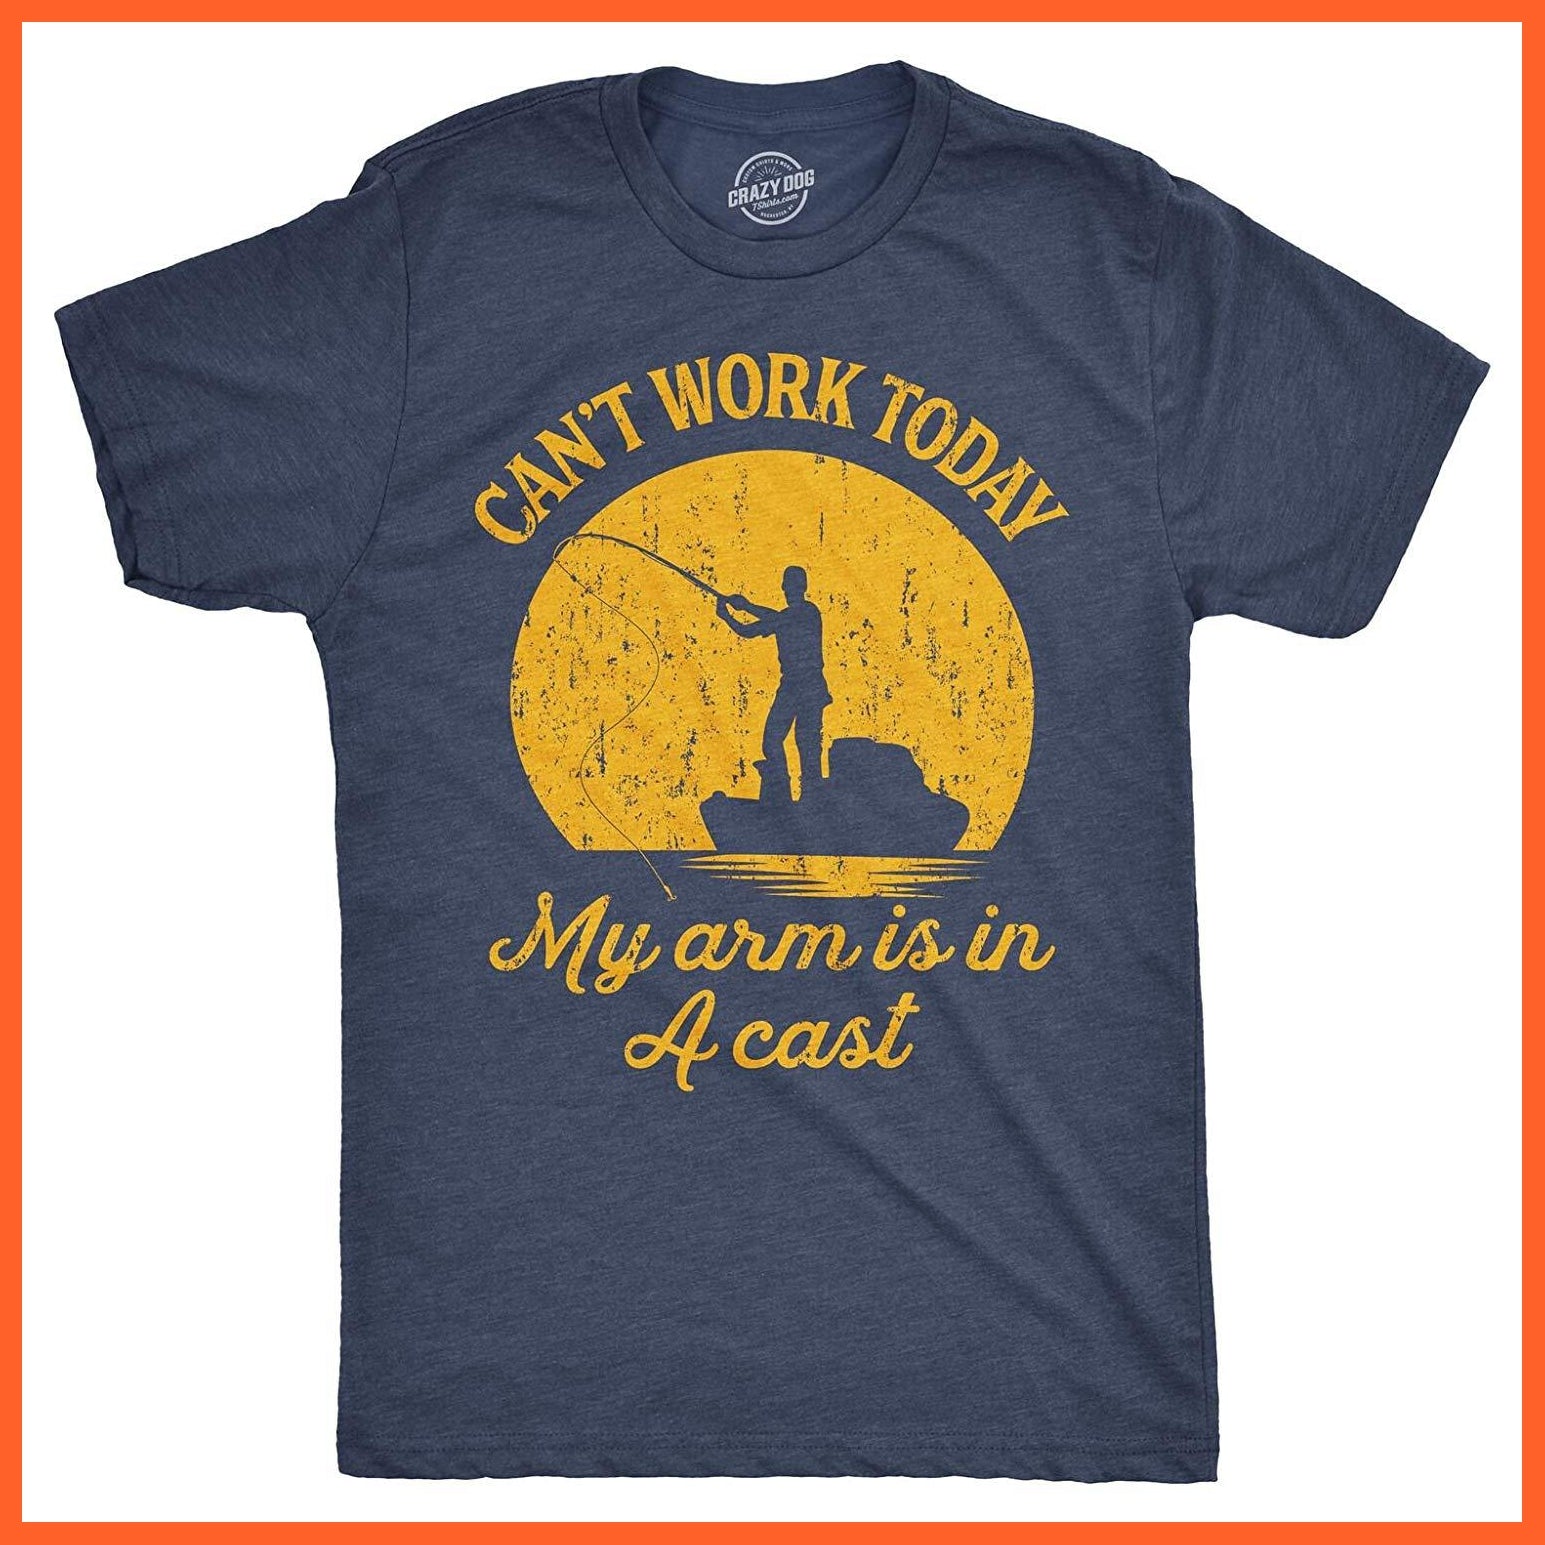 Can'T Work Today - Premium Tshirts | whatagift.com.au.